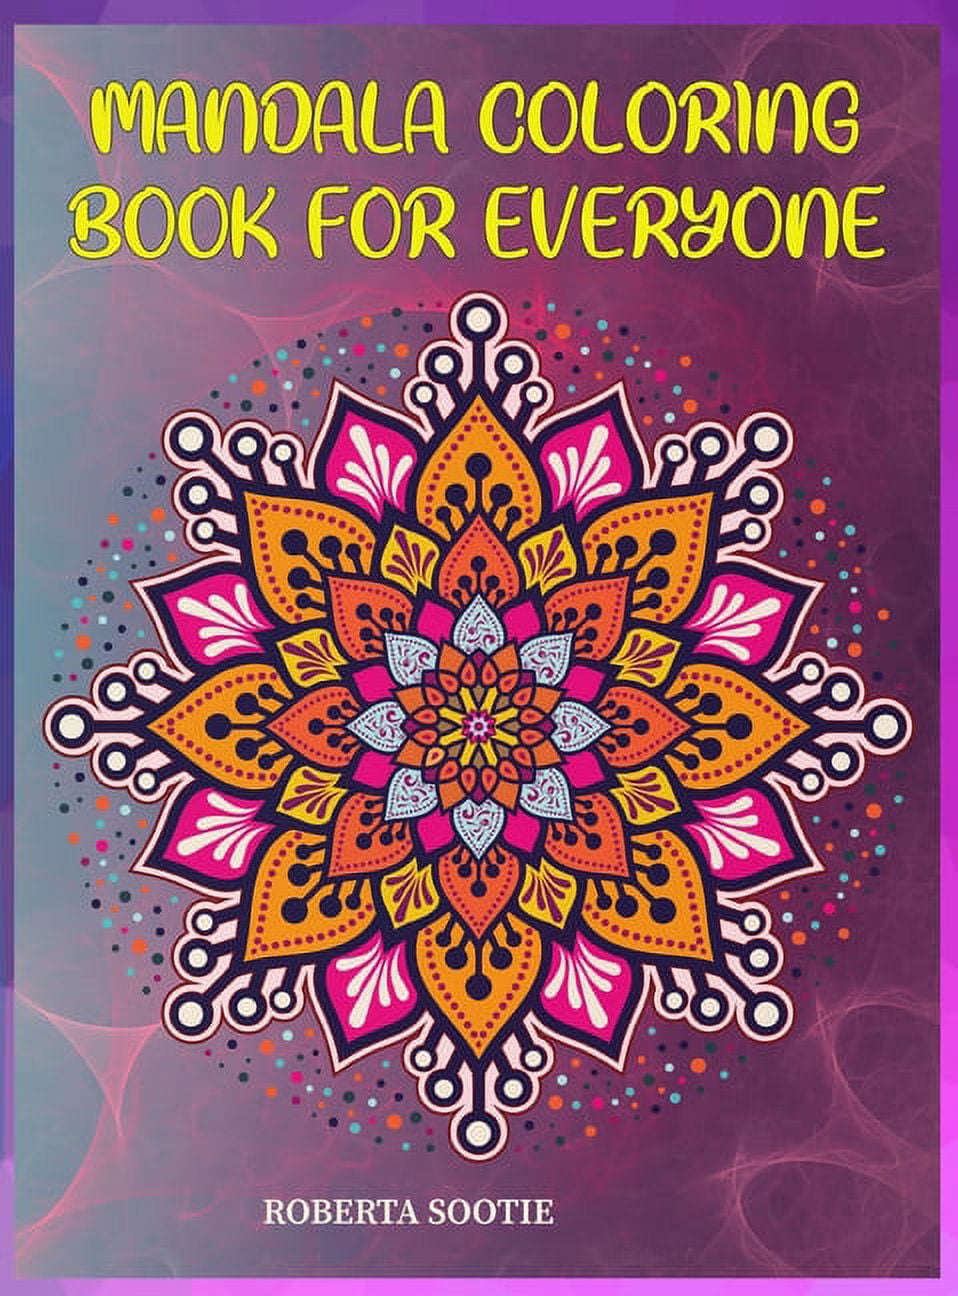 ISBN 9781782142812 Kids Adult Teen Coloring Color Book Calm MeditationDesign